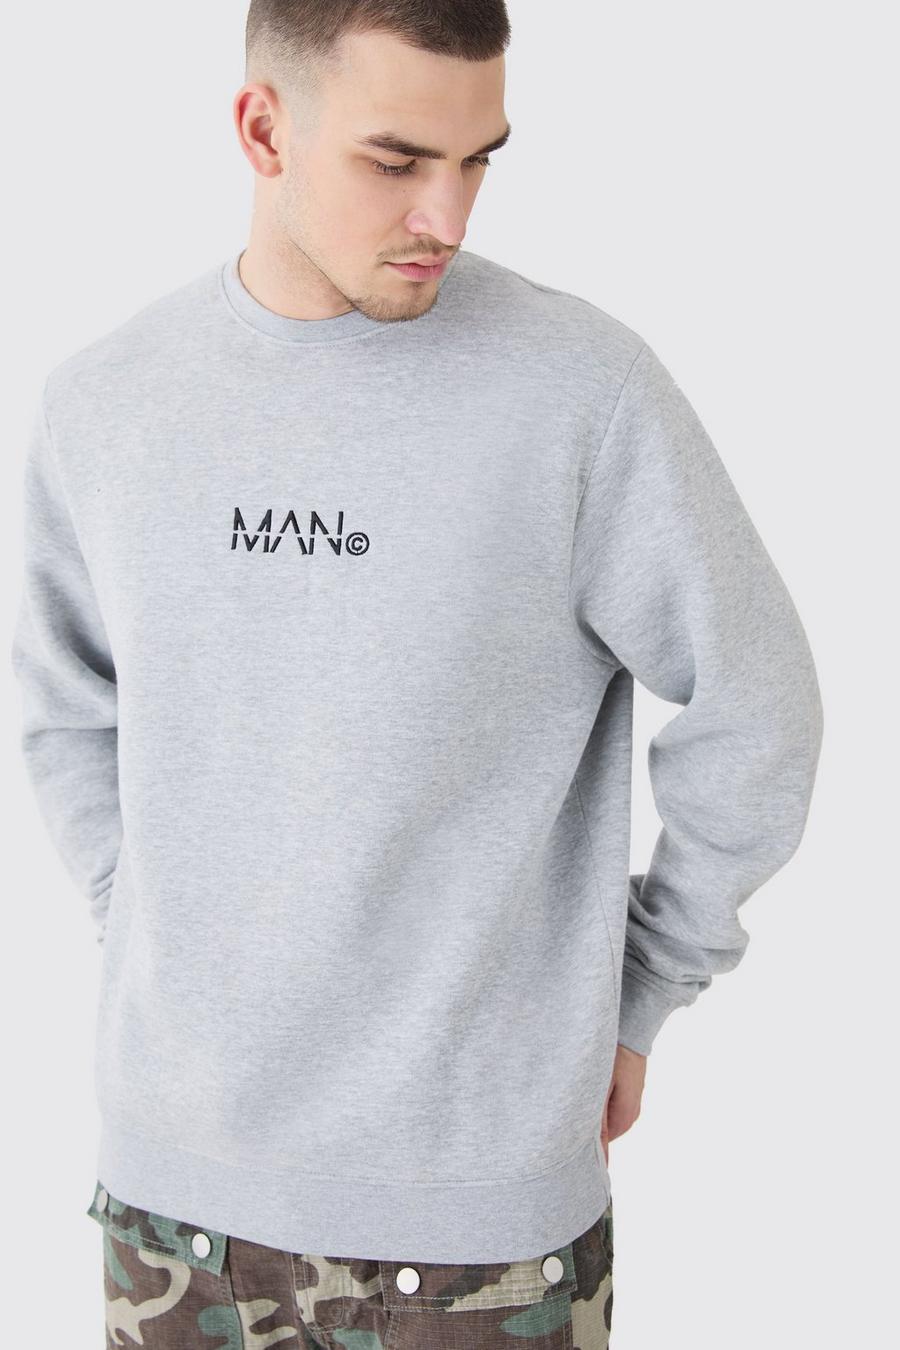 Tall Man Dash Crew Neck Sweatshirt In Grey Marl